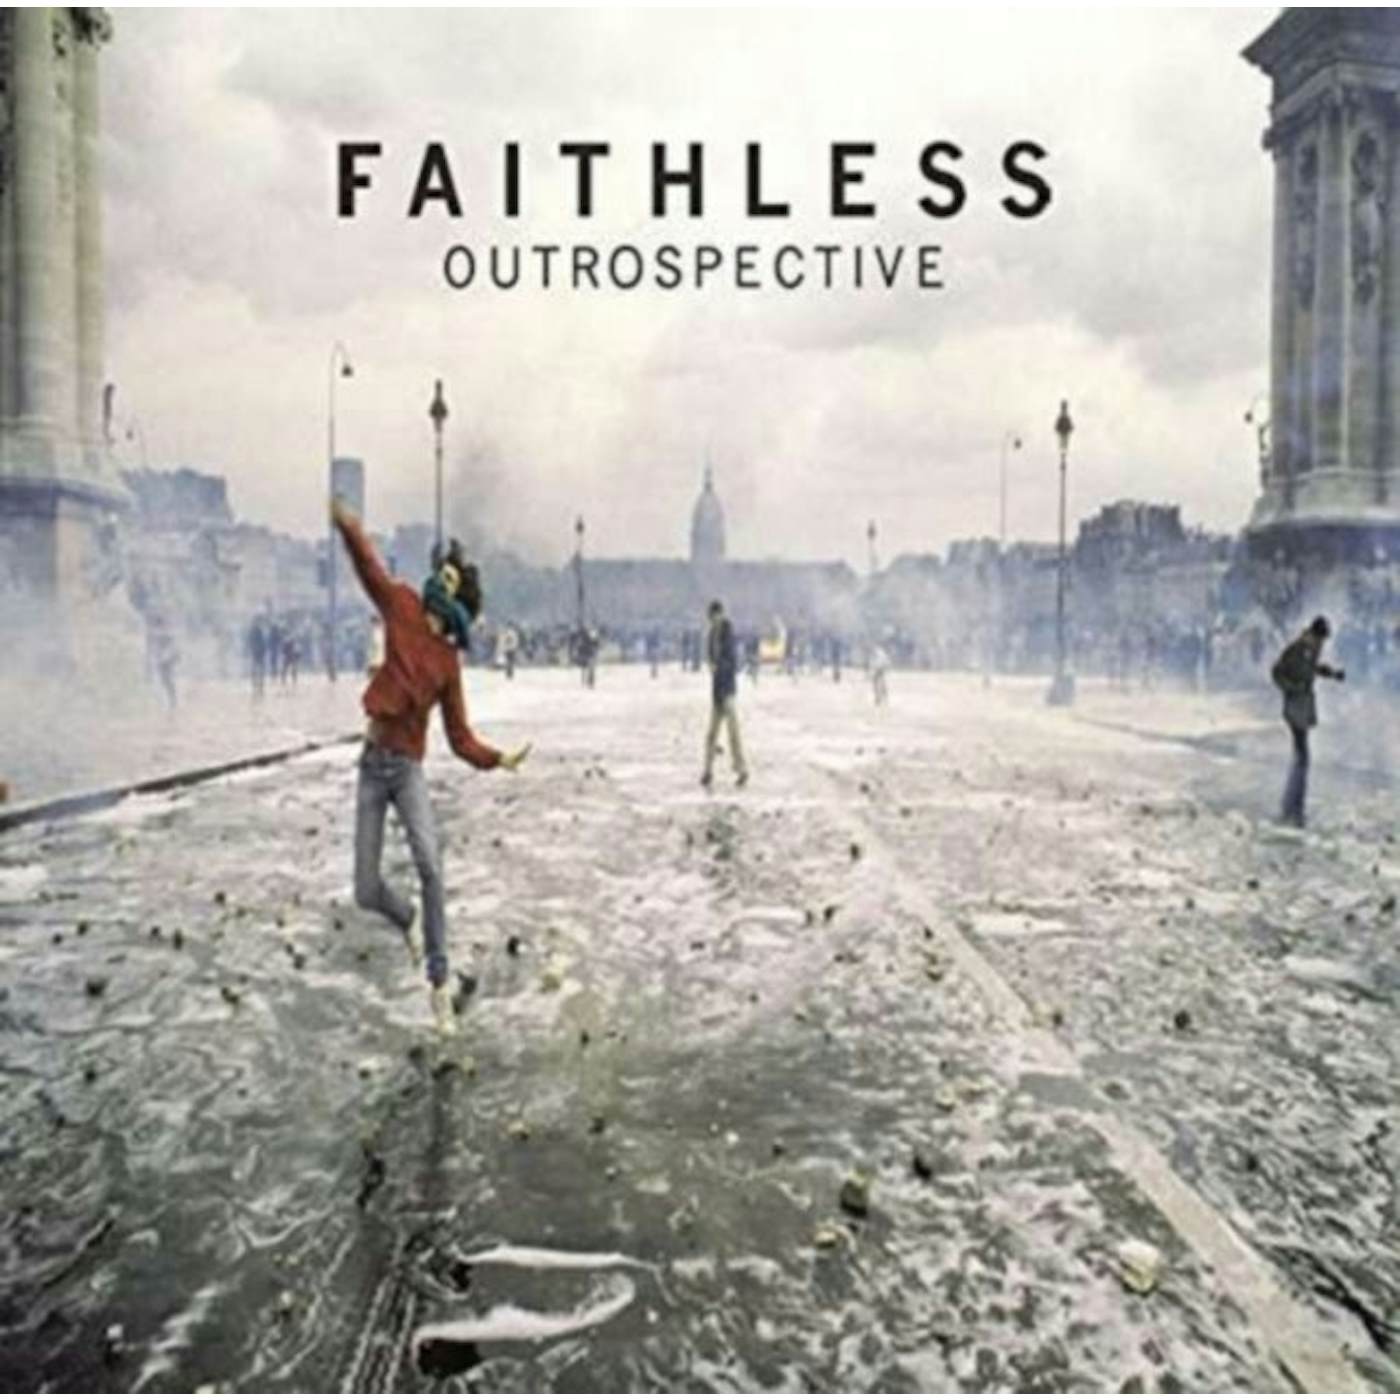 Faithless LP Vinyl Record - Outrospective